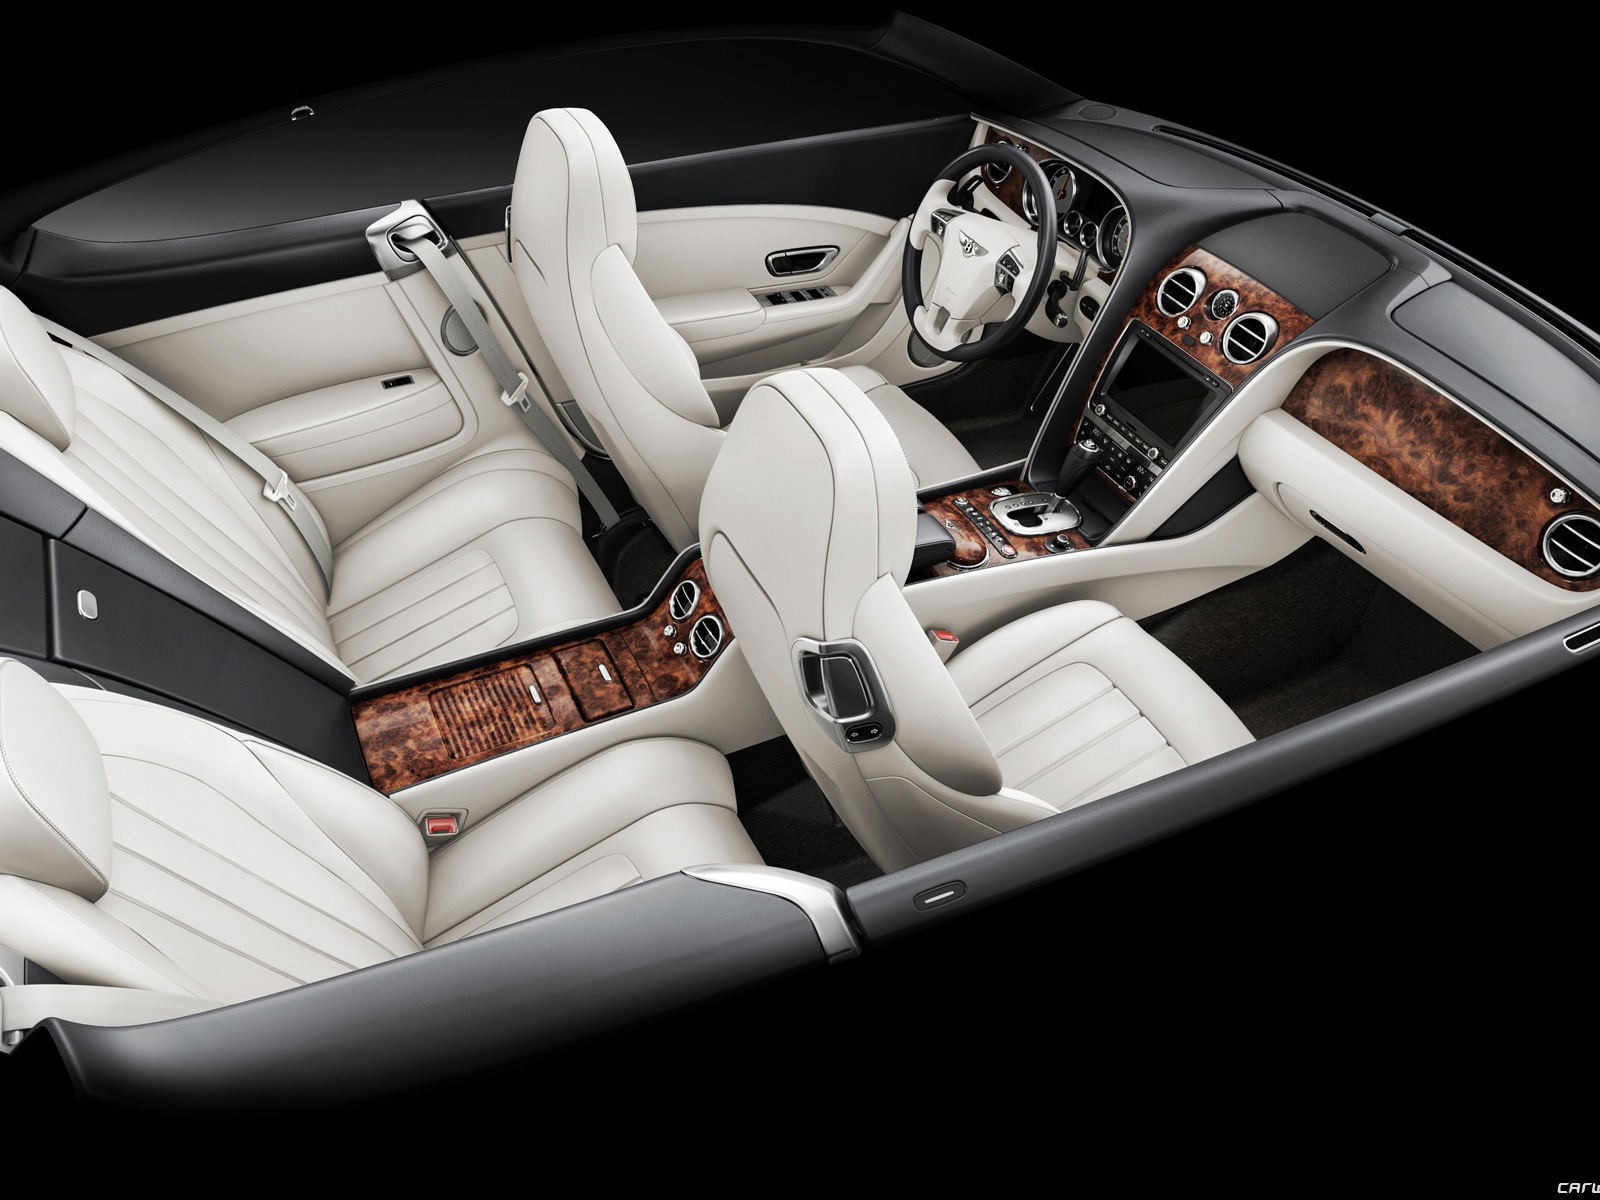 Bentley Continental GT - 2010 賓利 #38 - 1600x1200